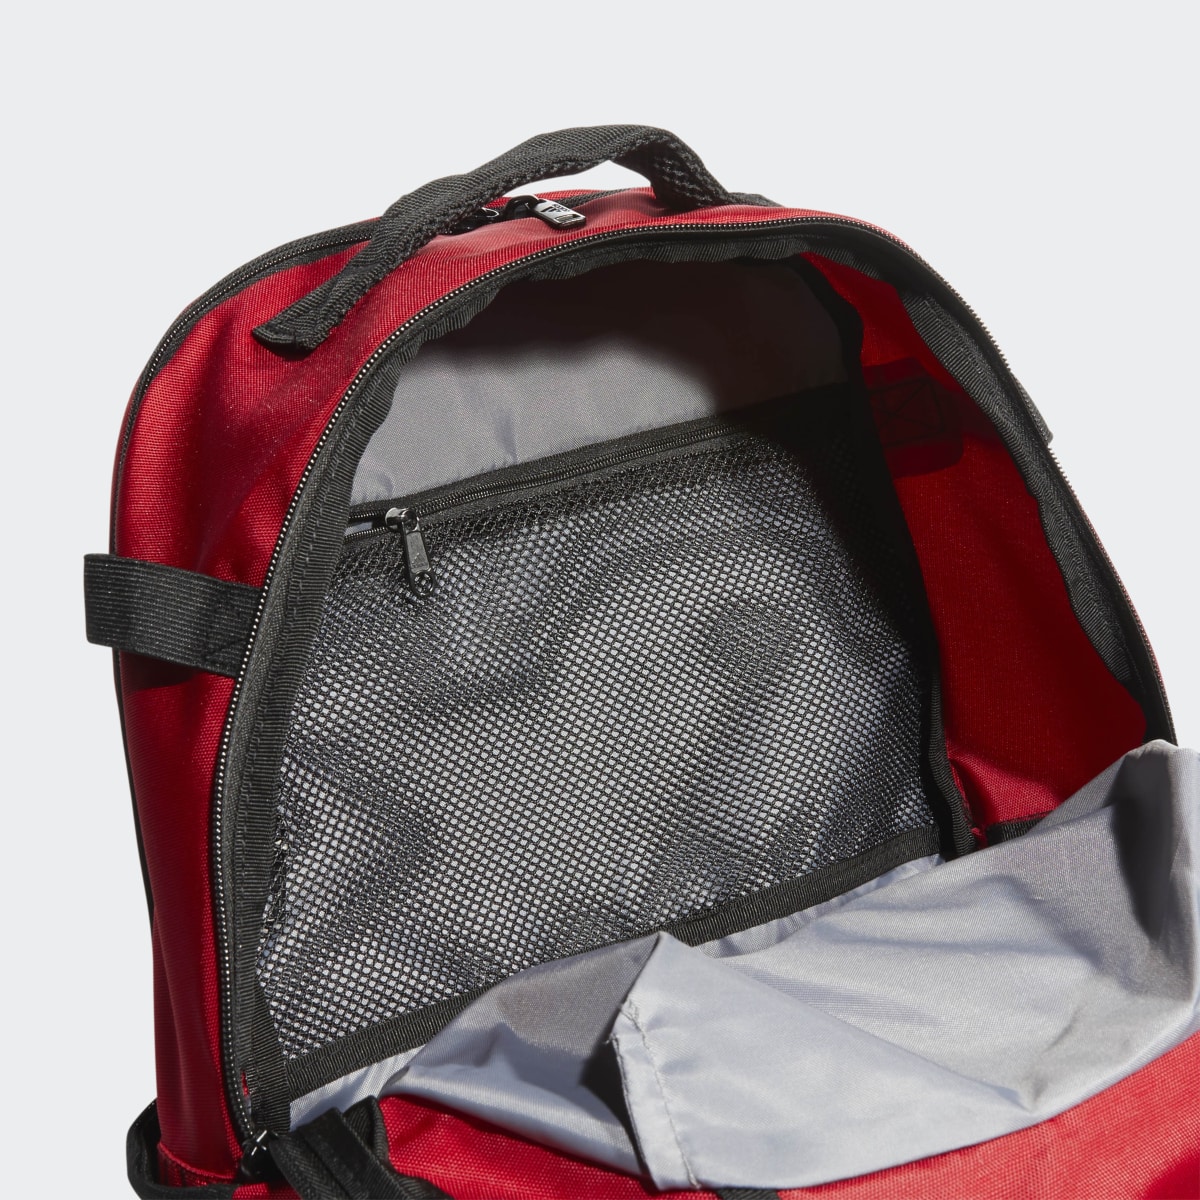 Adidas 5-Star Team Backpack. 5